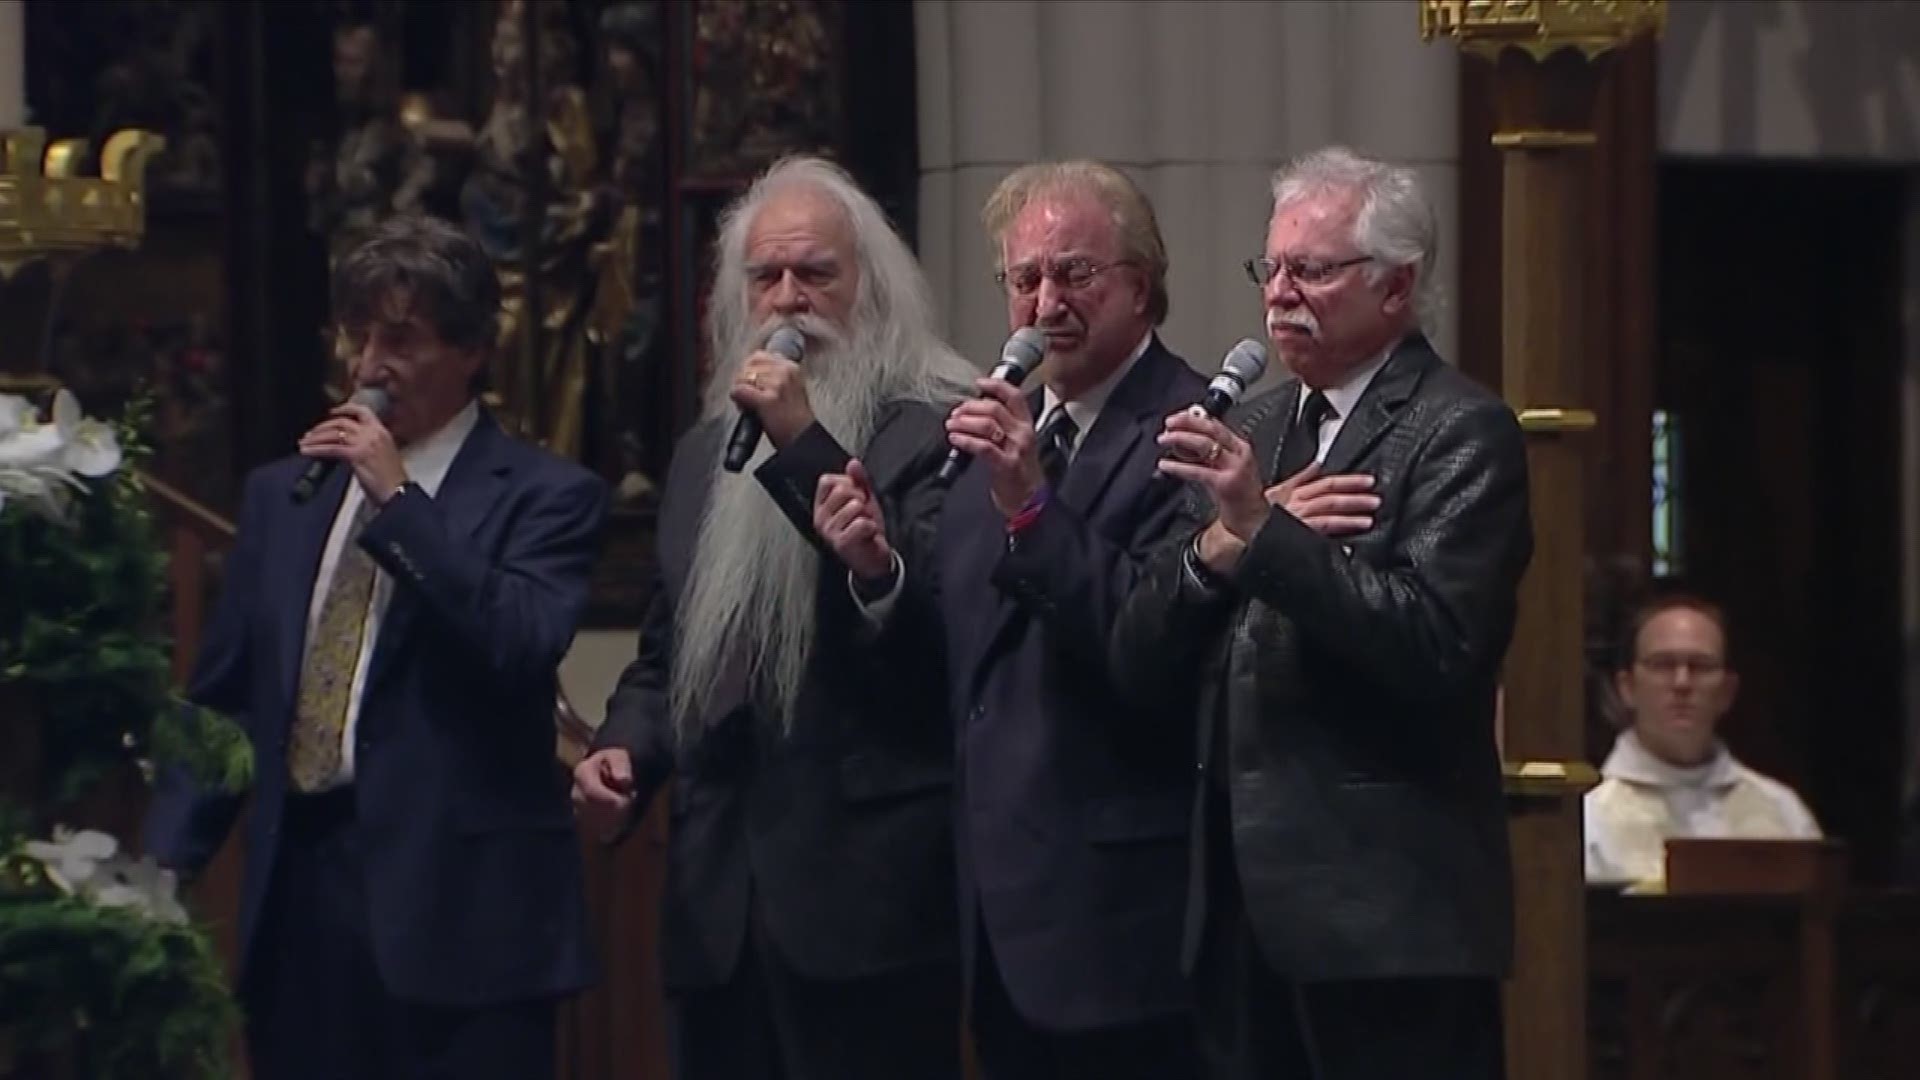 The Oak Ridge Boys sang 'Amazing Grace' during former president George H.W. Bush's funeral on Thursday.